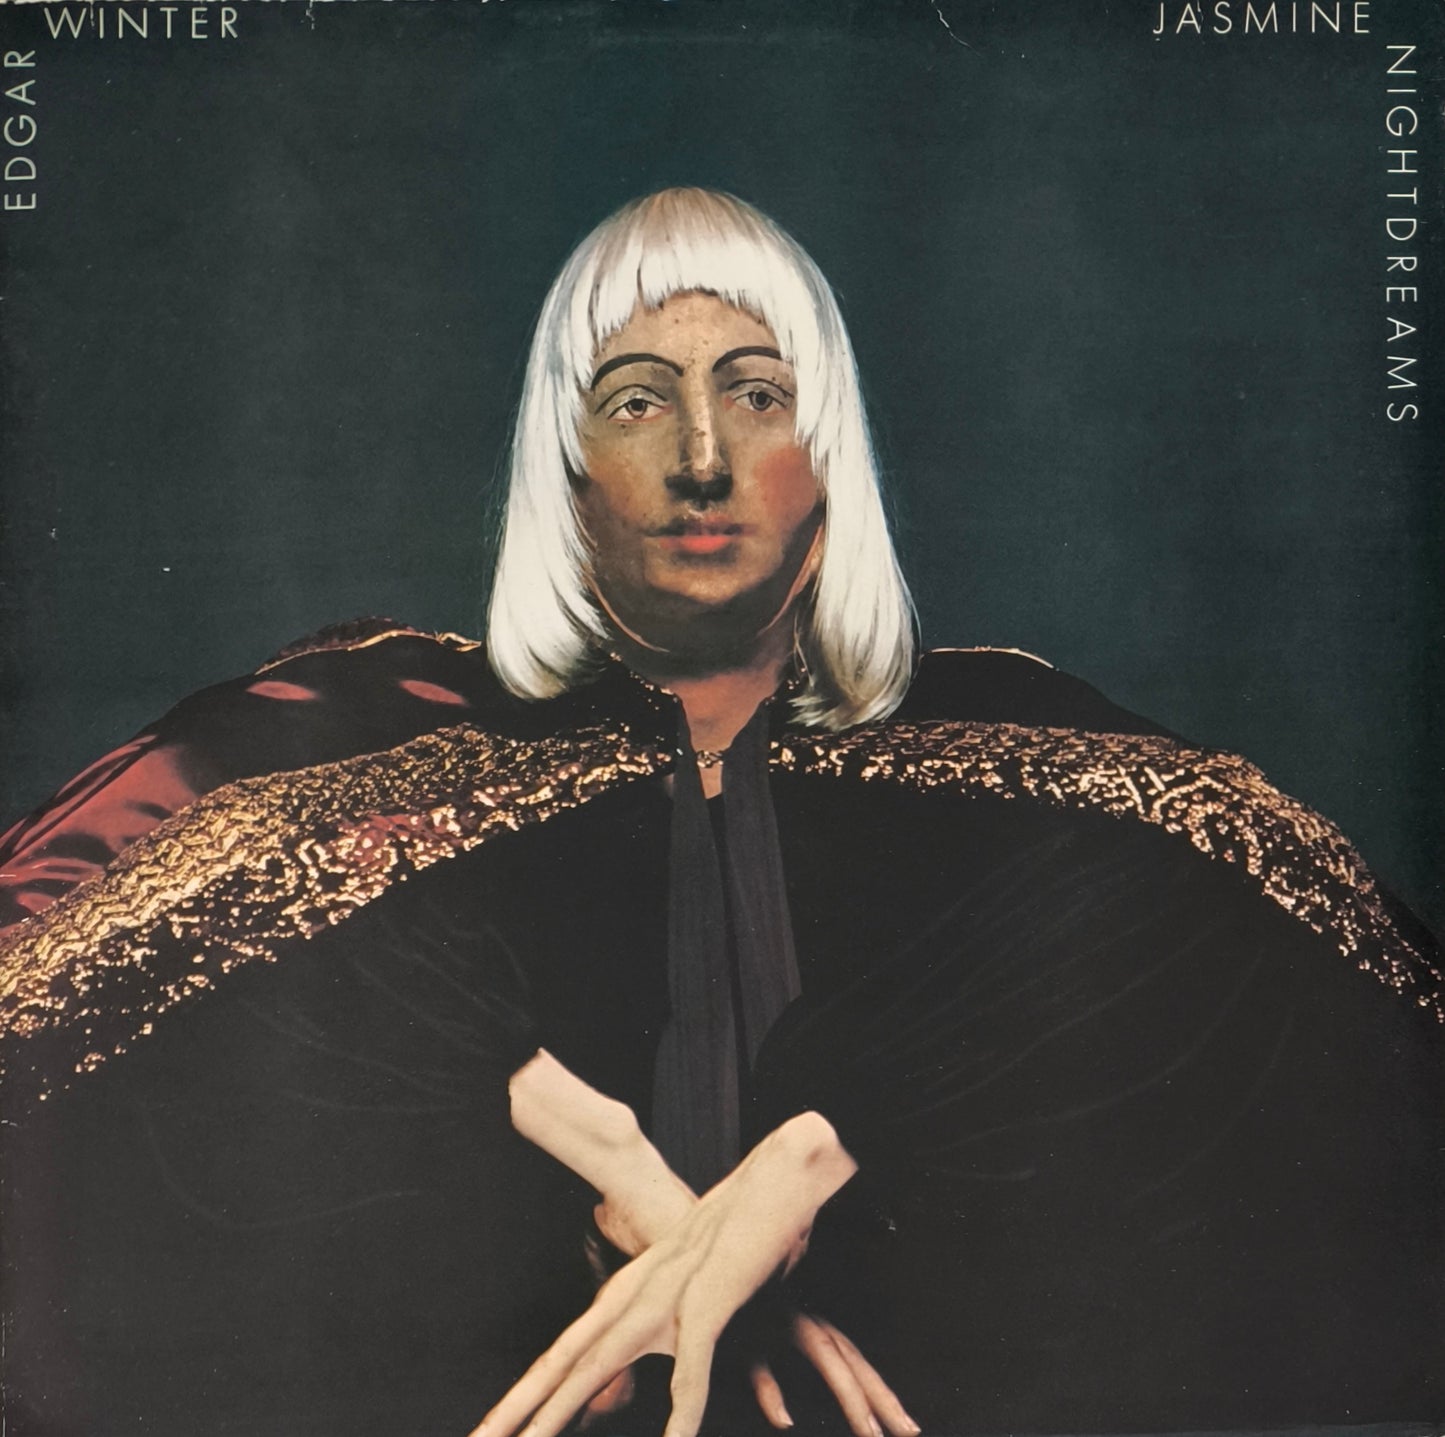 EDGAR WINTER - Jasmine Nightdreams